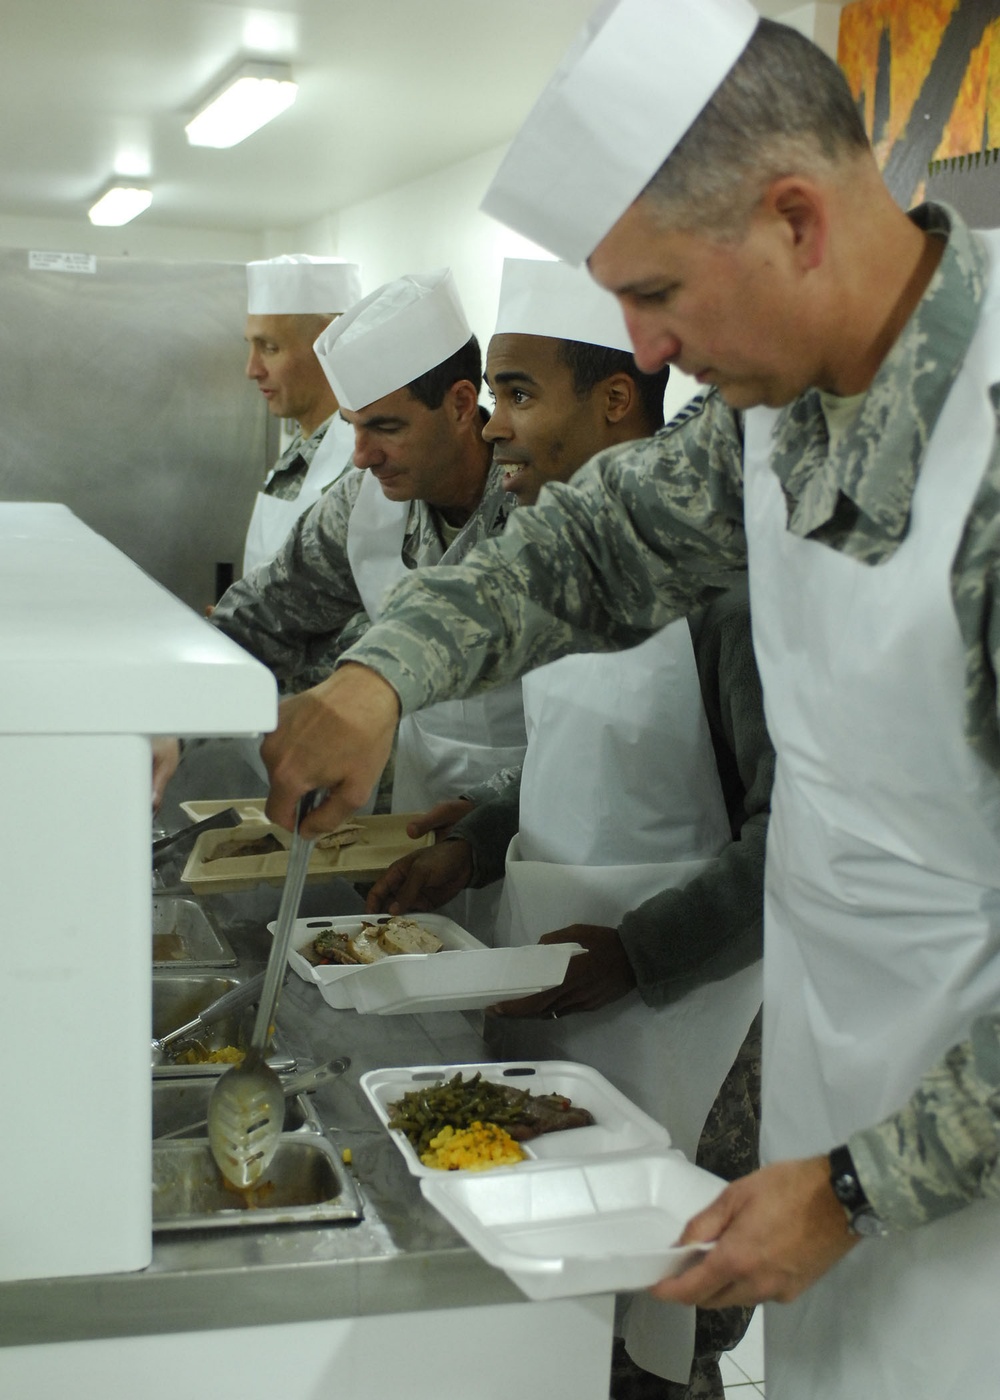 Thanksgiving celebration with deployed family